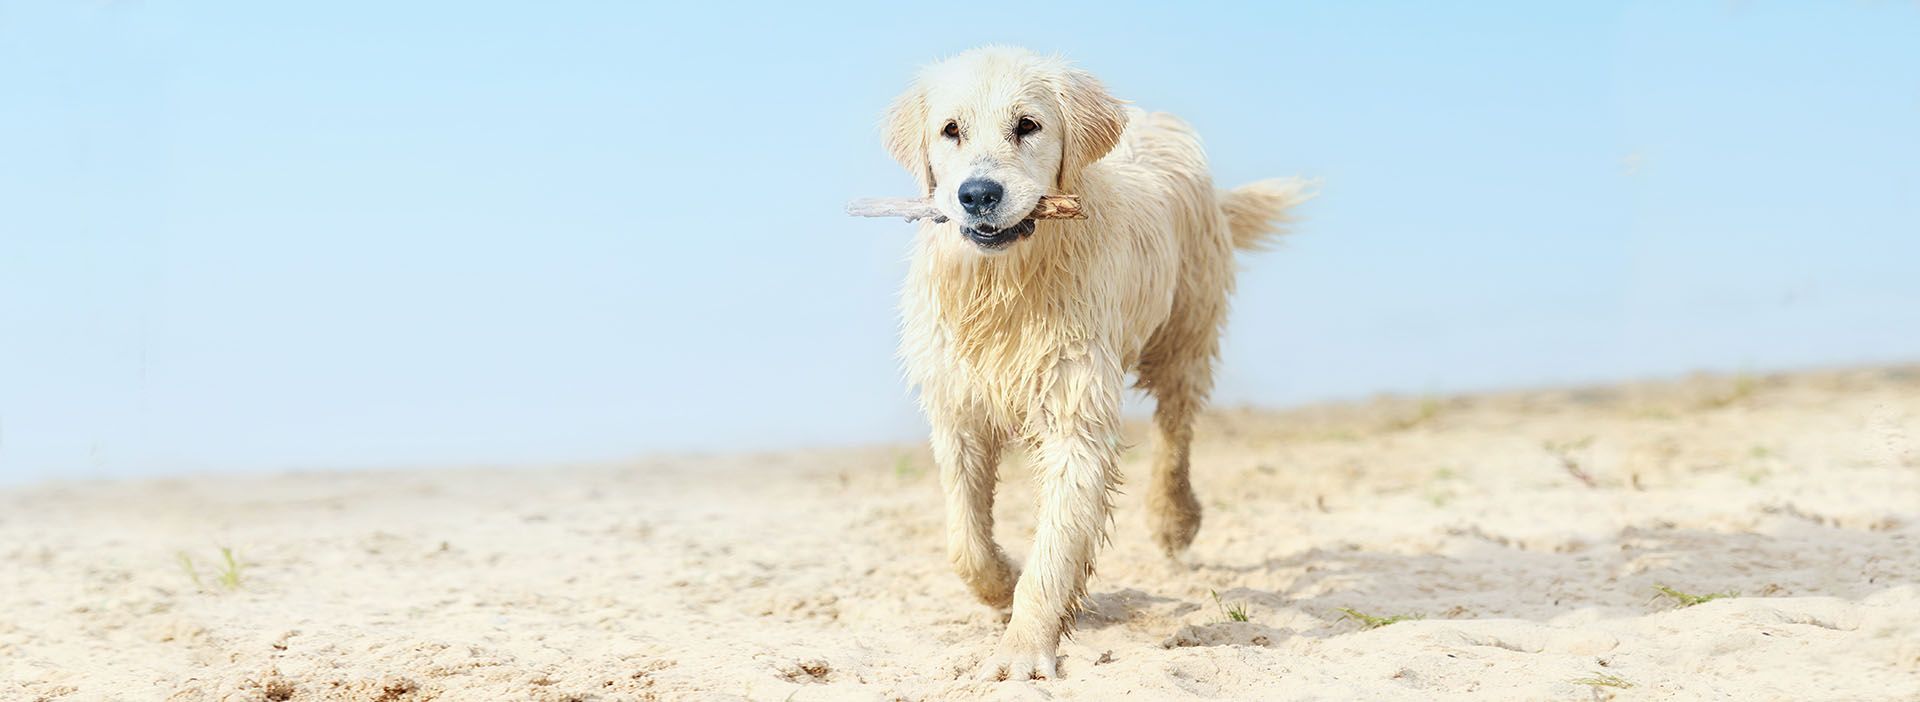 Hund Golden Retriever läuft am Strand